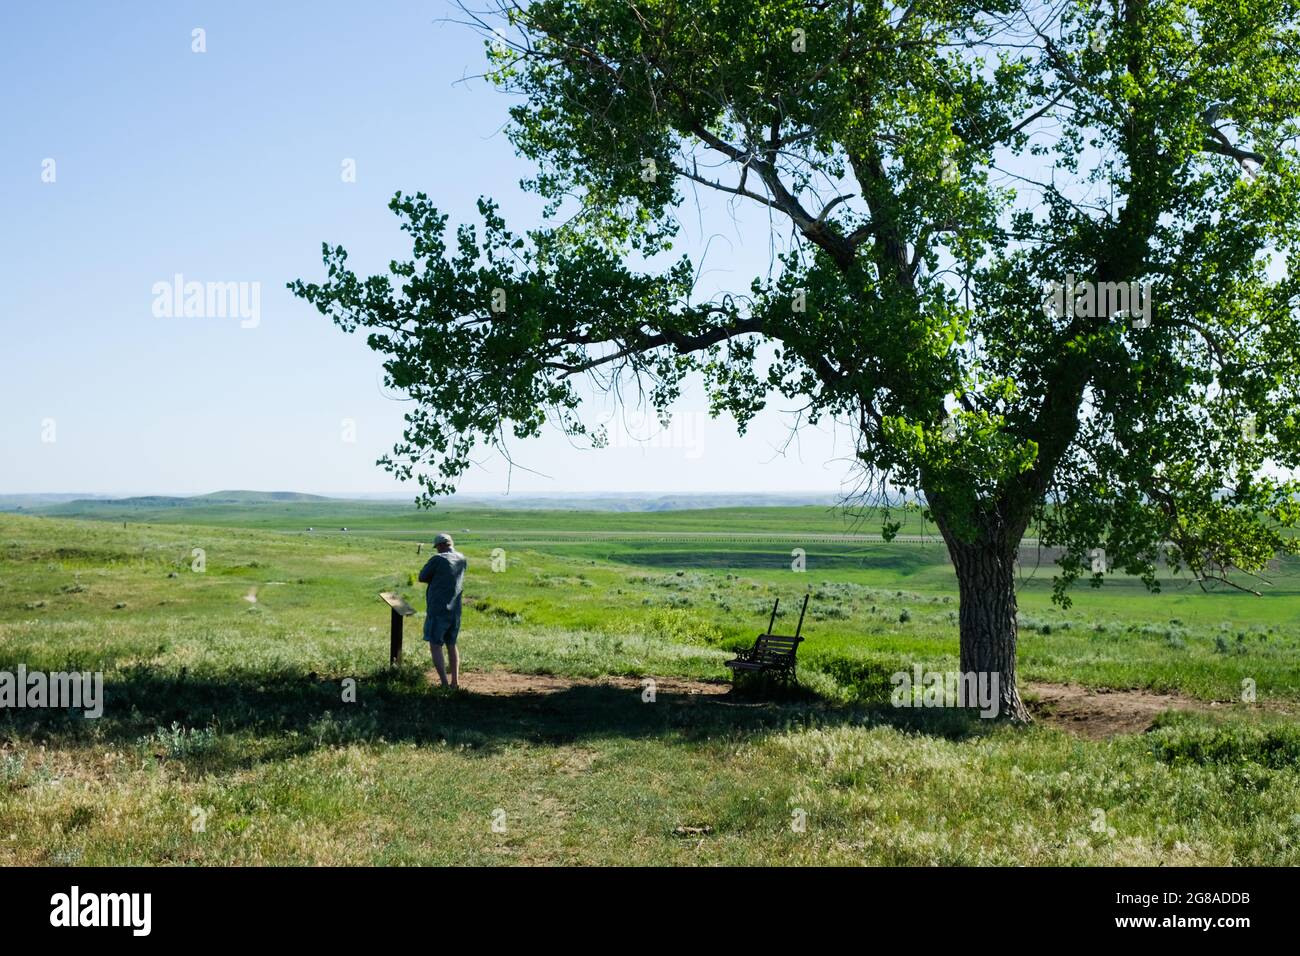 Fetterman massacre site, near Story, Wyoming. Stock Photo